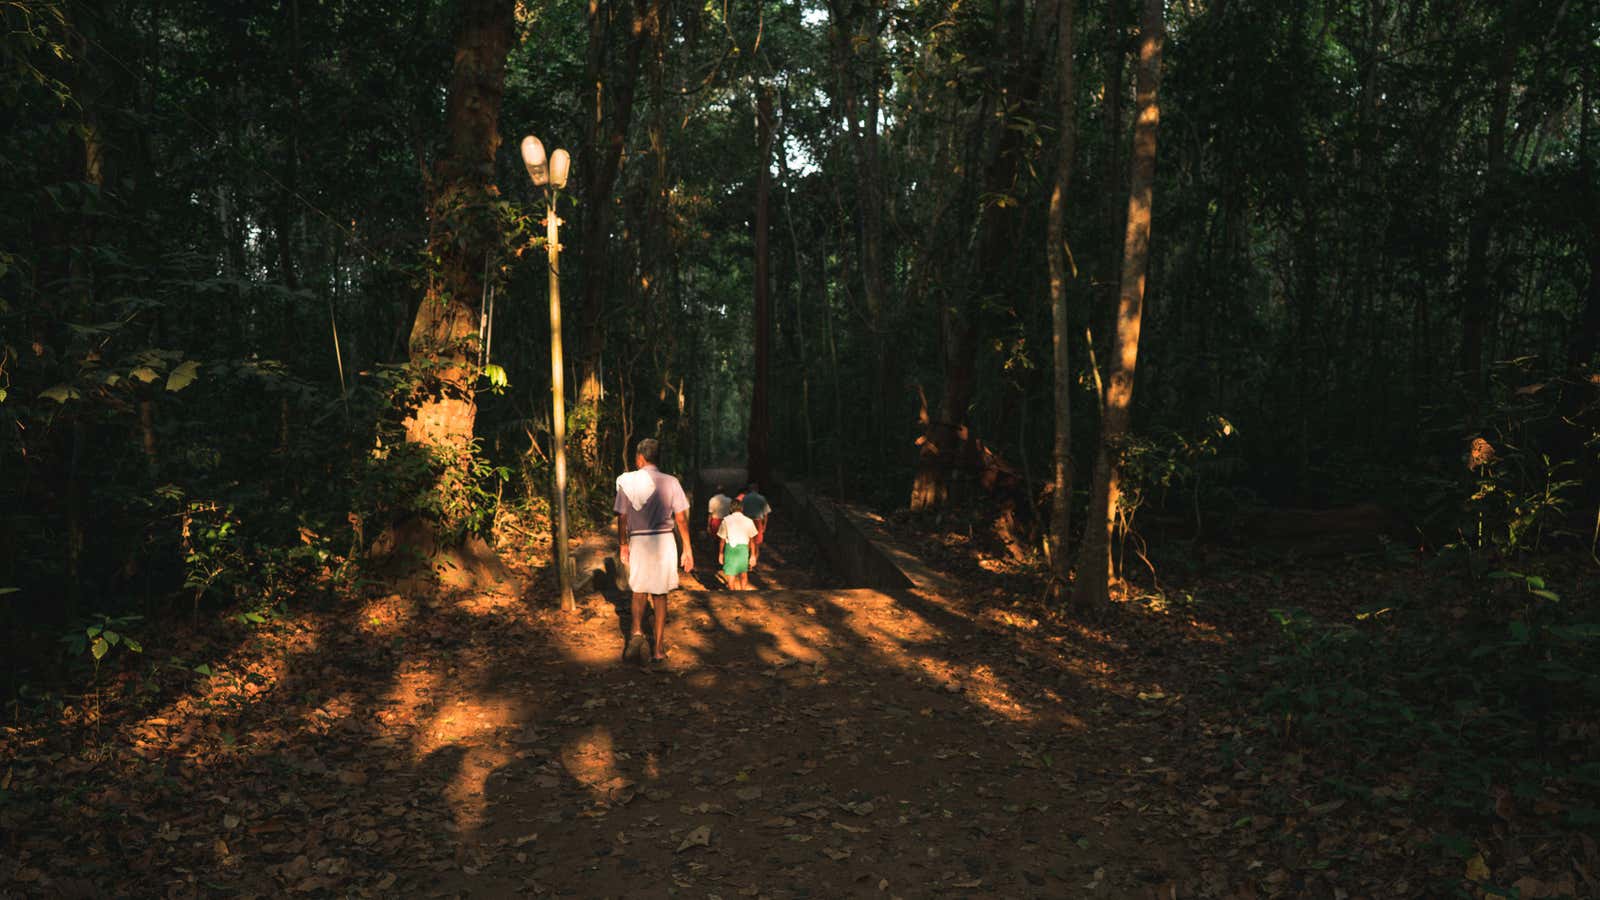 Men walking through the forest in Iringole Kavu near Kochi.